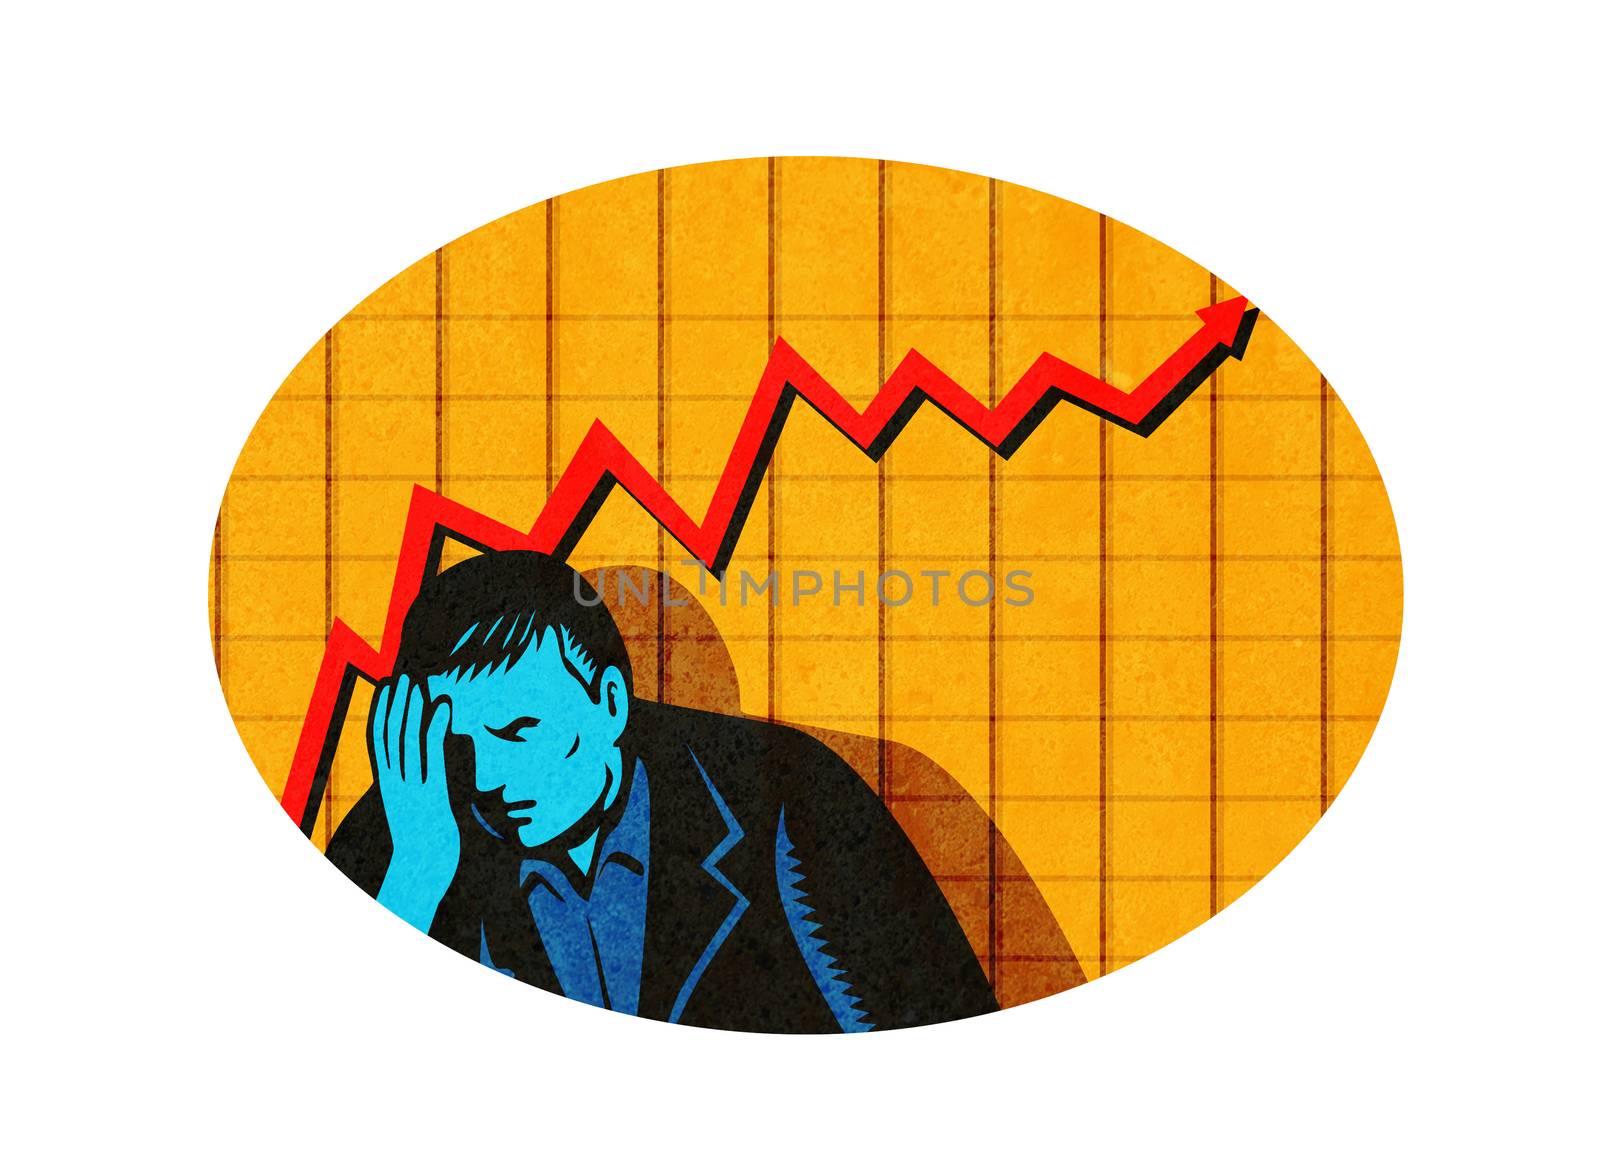 Retro style illustration of depressed or feeling ashamed businessman with upward line graph in background set inside oval shape.